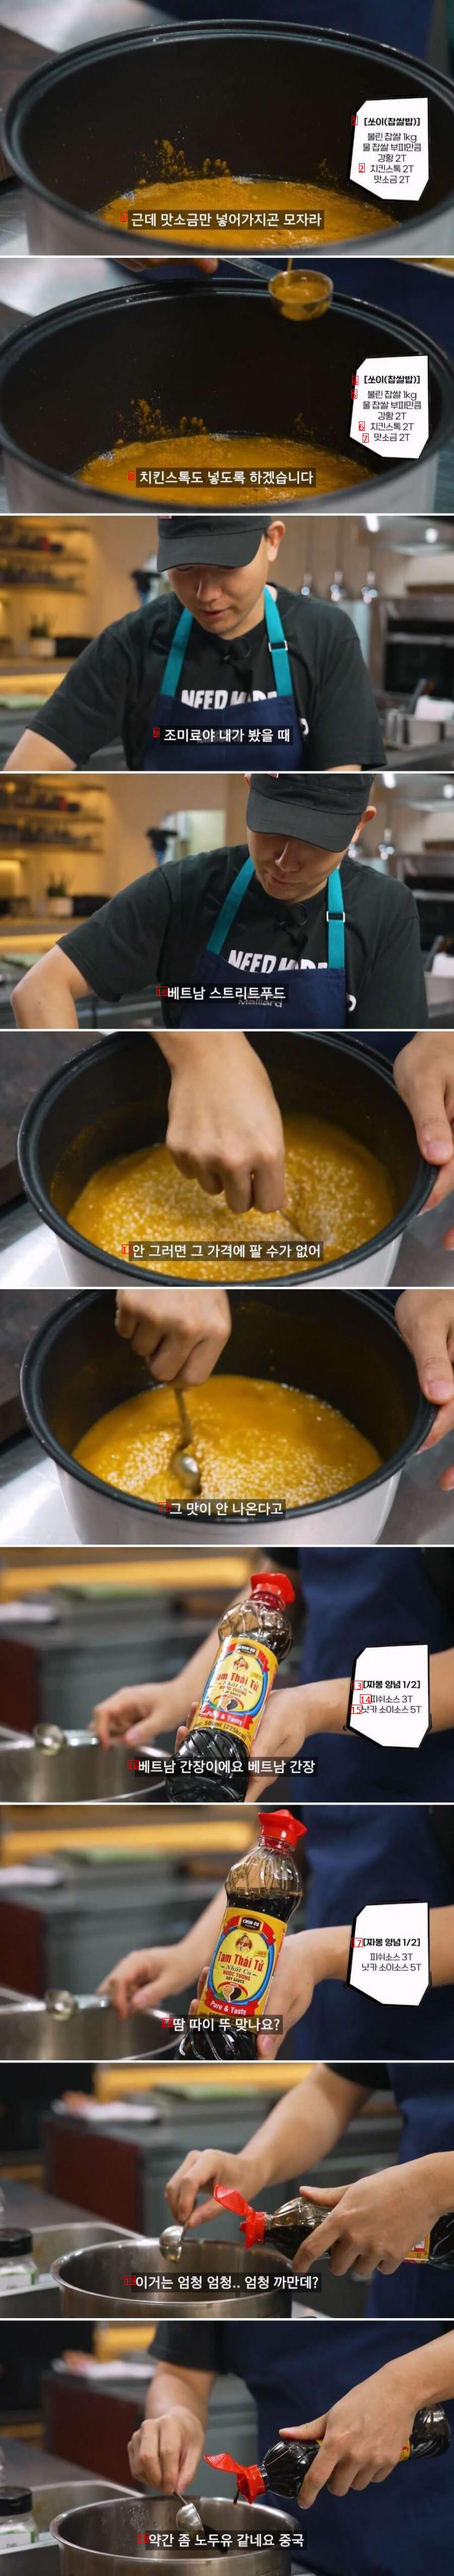 Seungwoo's dad reveals the secret of Vietnamese street food